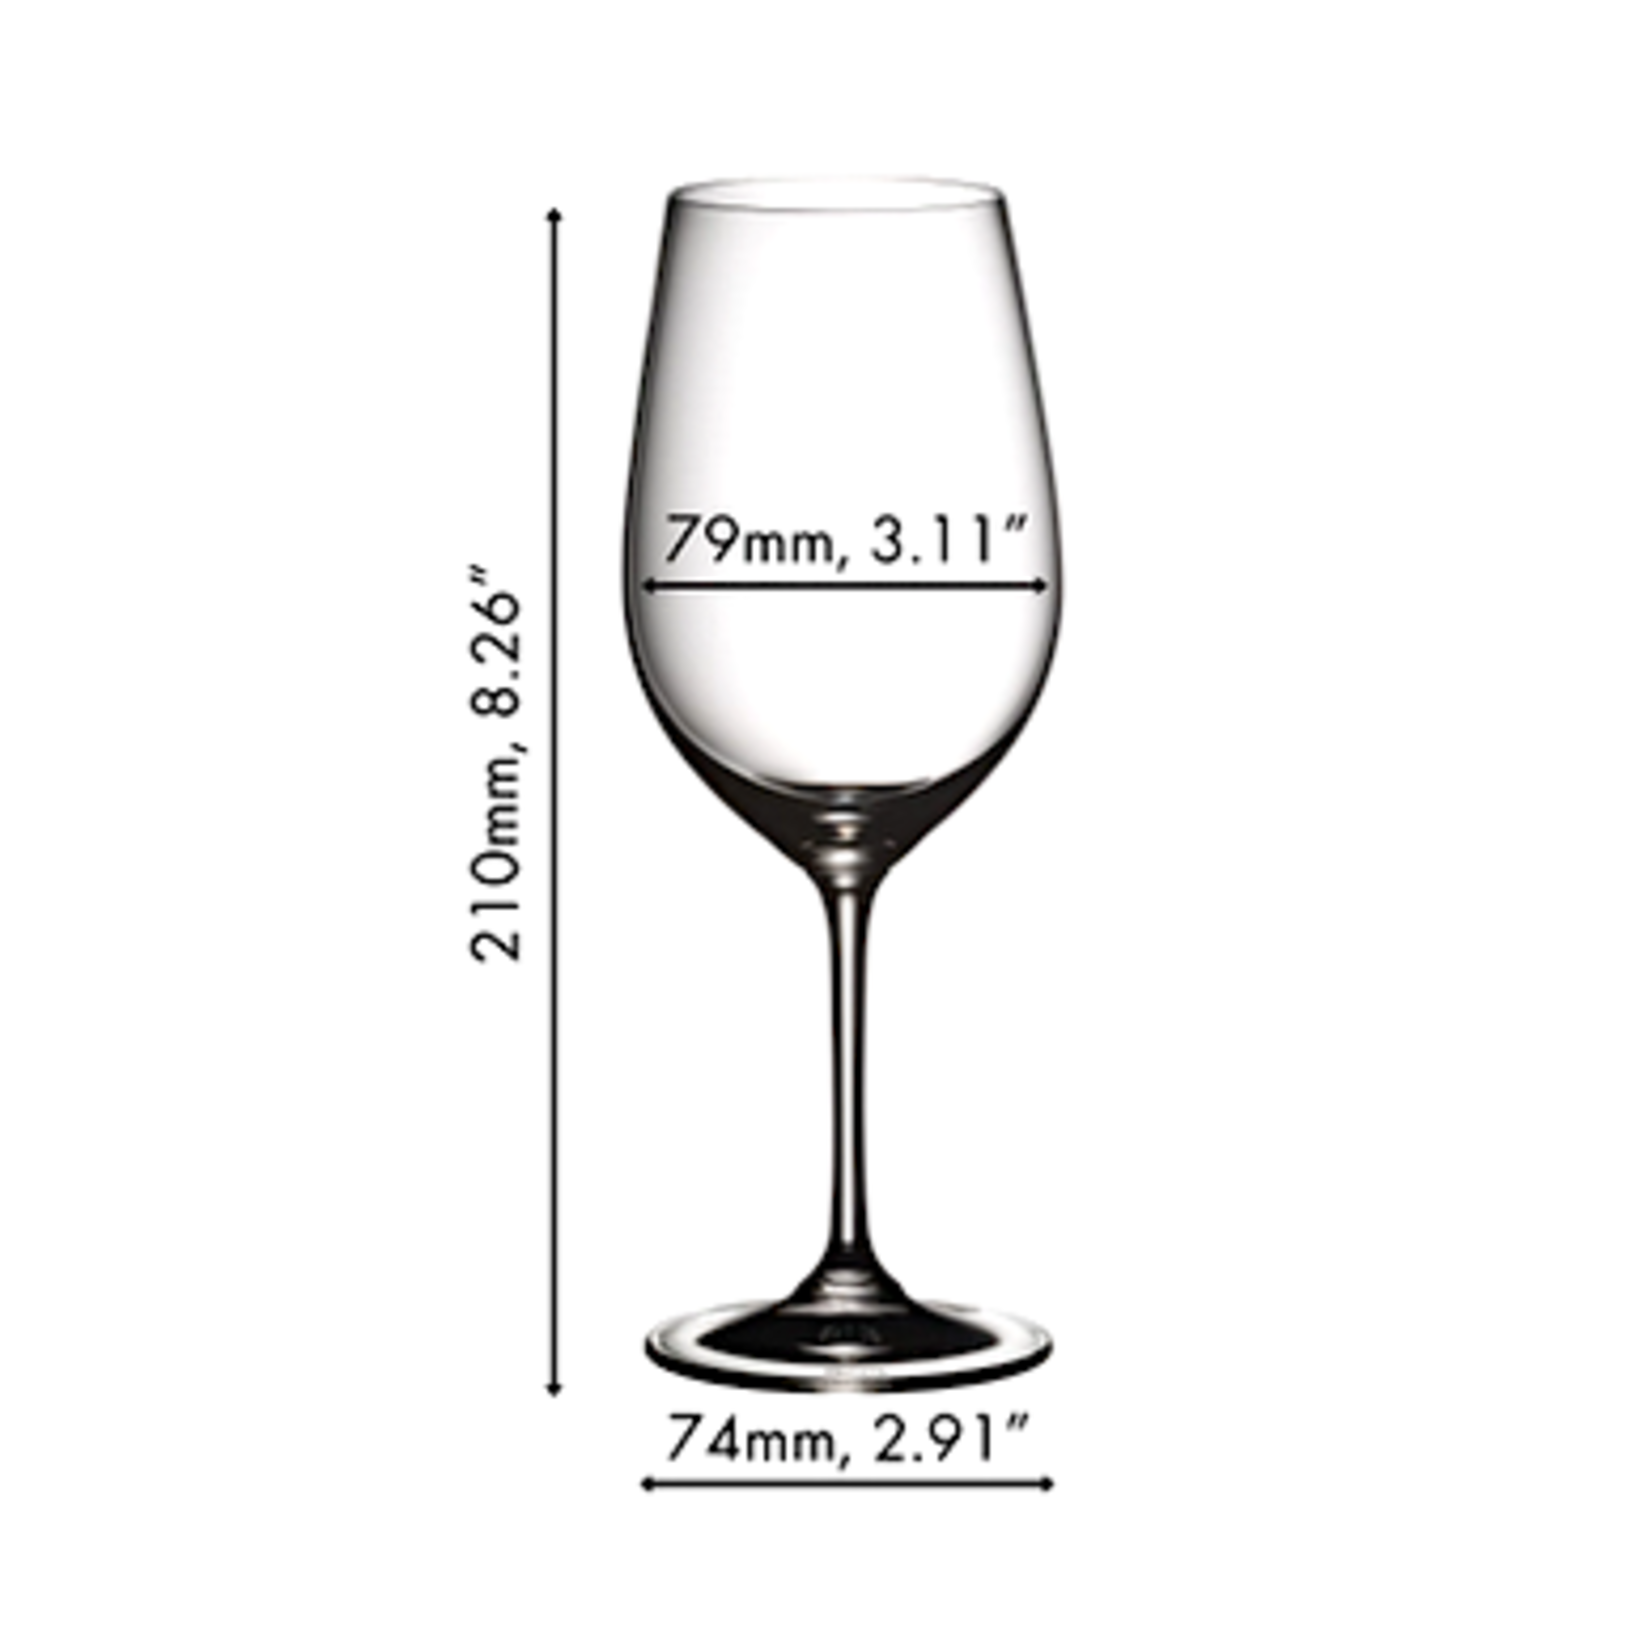 Riedel Riedel Vinum Riesling Grand Cru/ Zinfandel Wine Glasses (Sold in a Pack of 2)